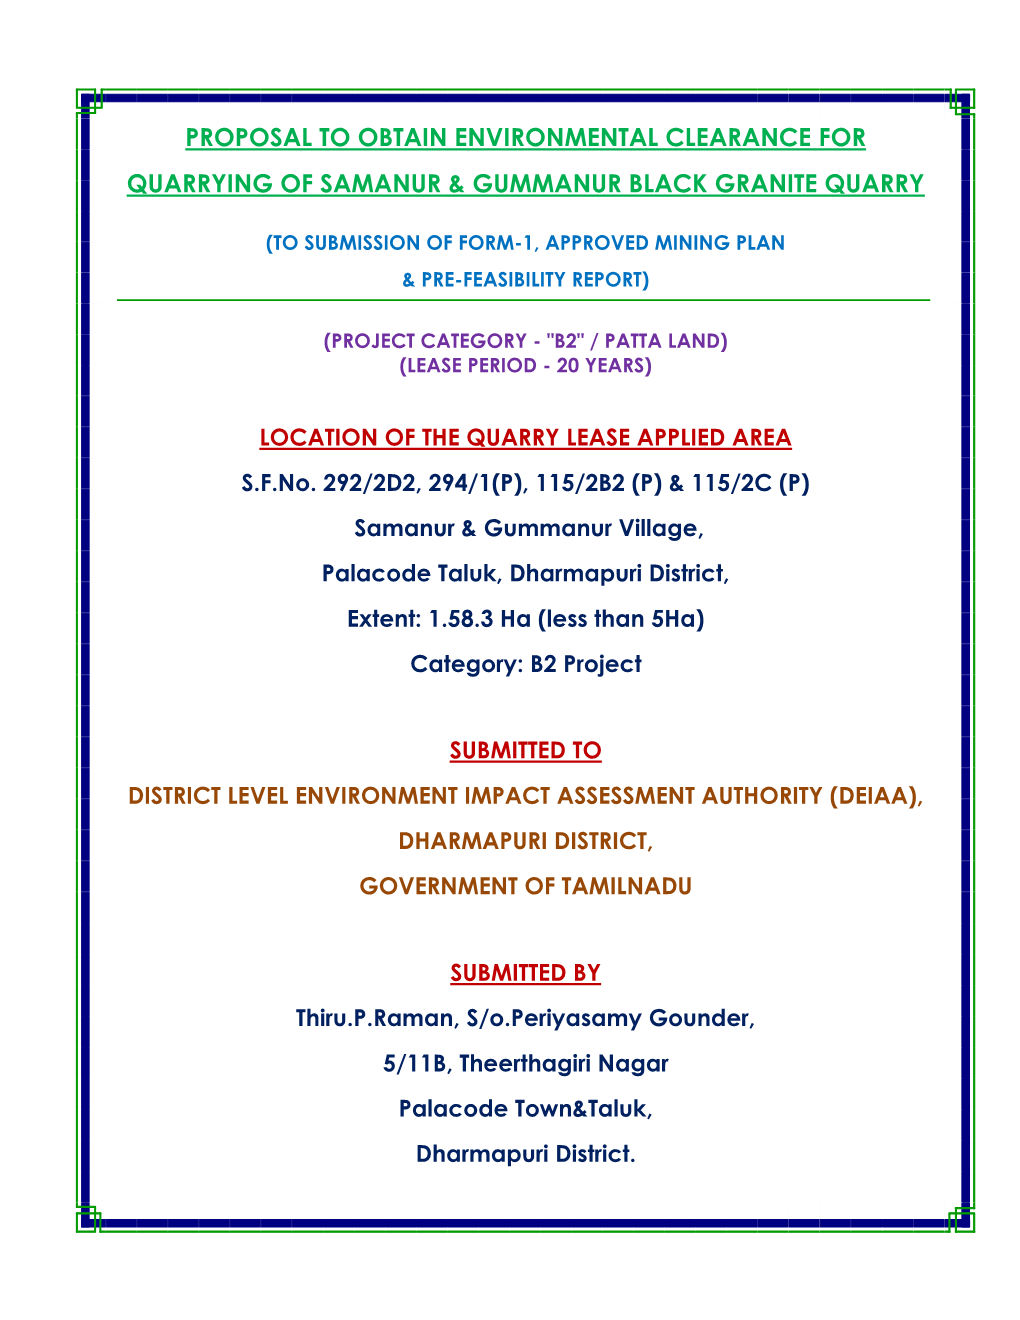 Proposal to Obtain Environmental Clearance for Quarrying of Samanur & Gummanur Black Granite Quarry